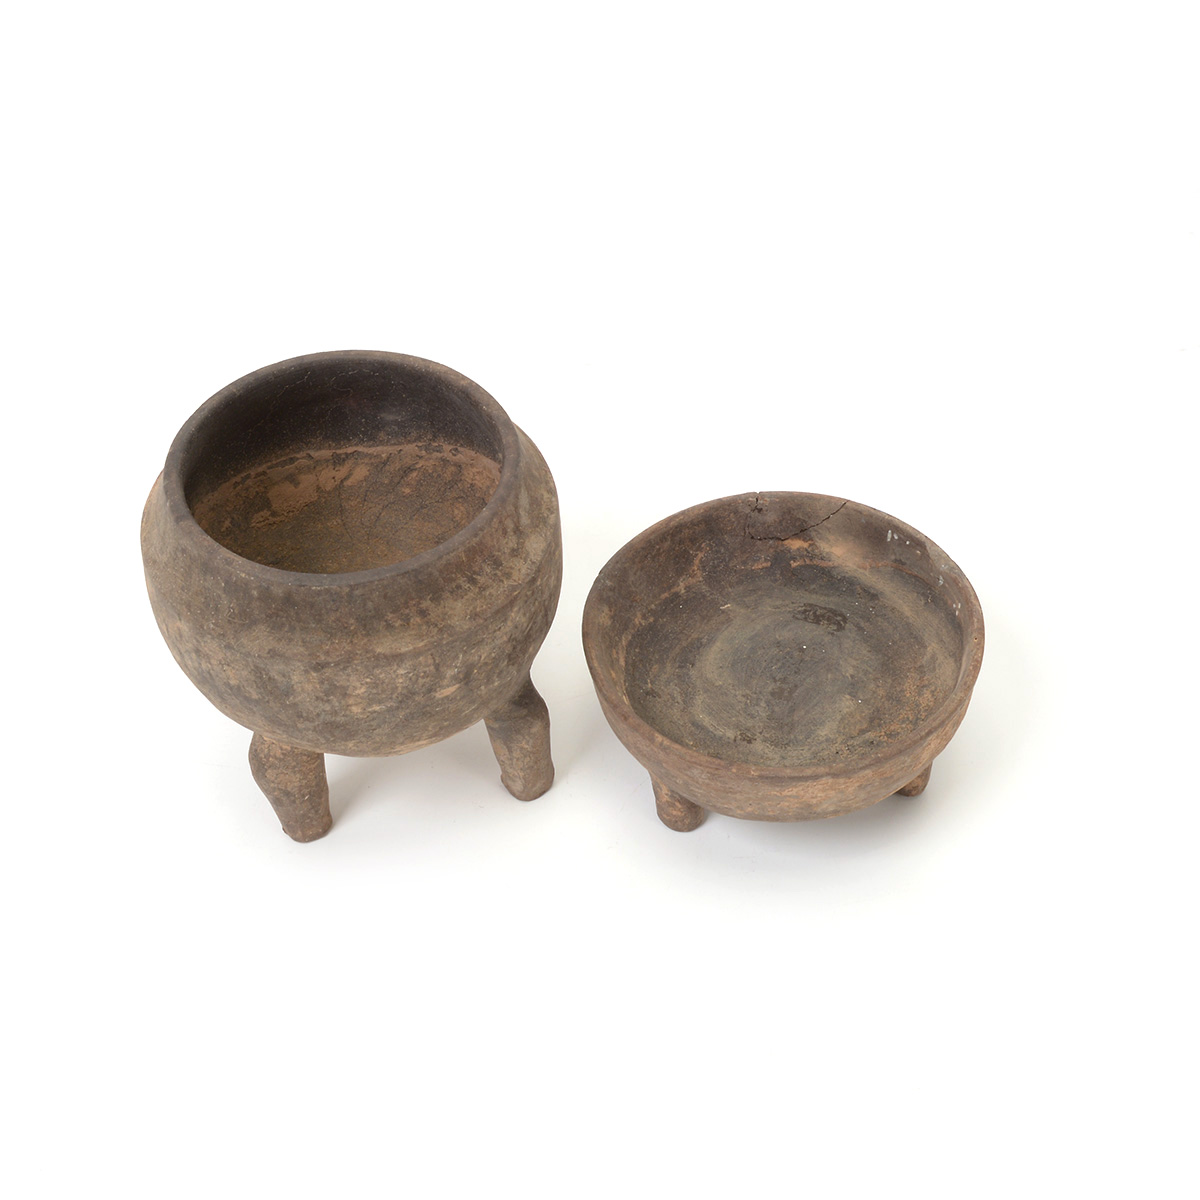 Pottery Tripod Vessel and Lid, Western Zhou Dynasty - Image 5 of 8